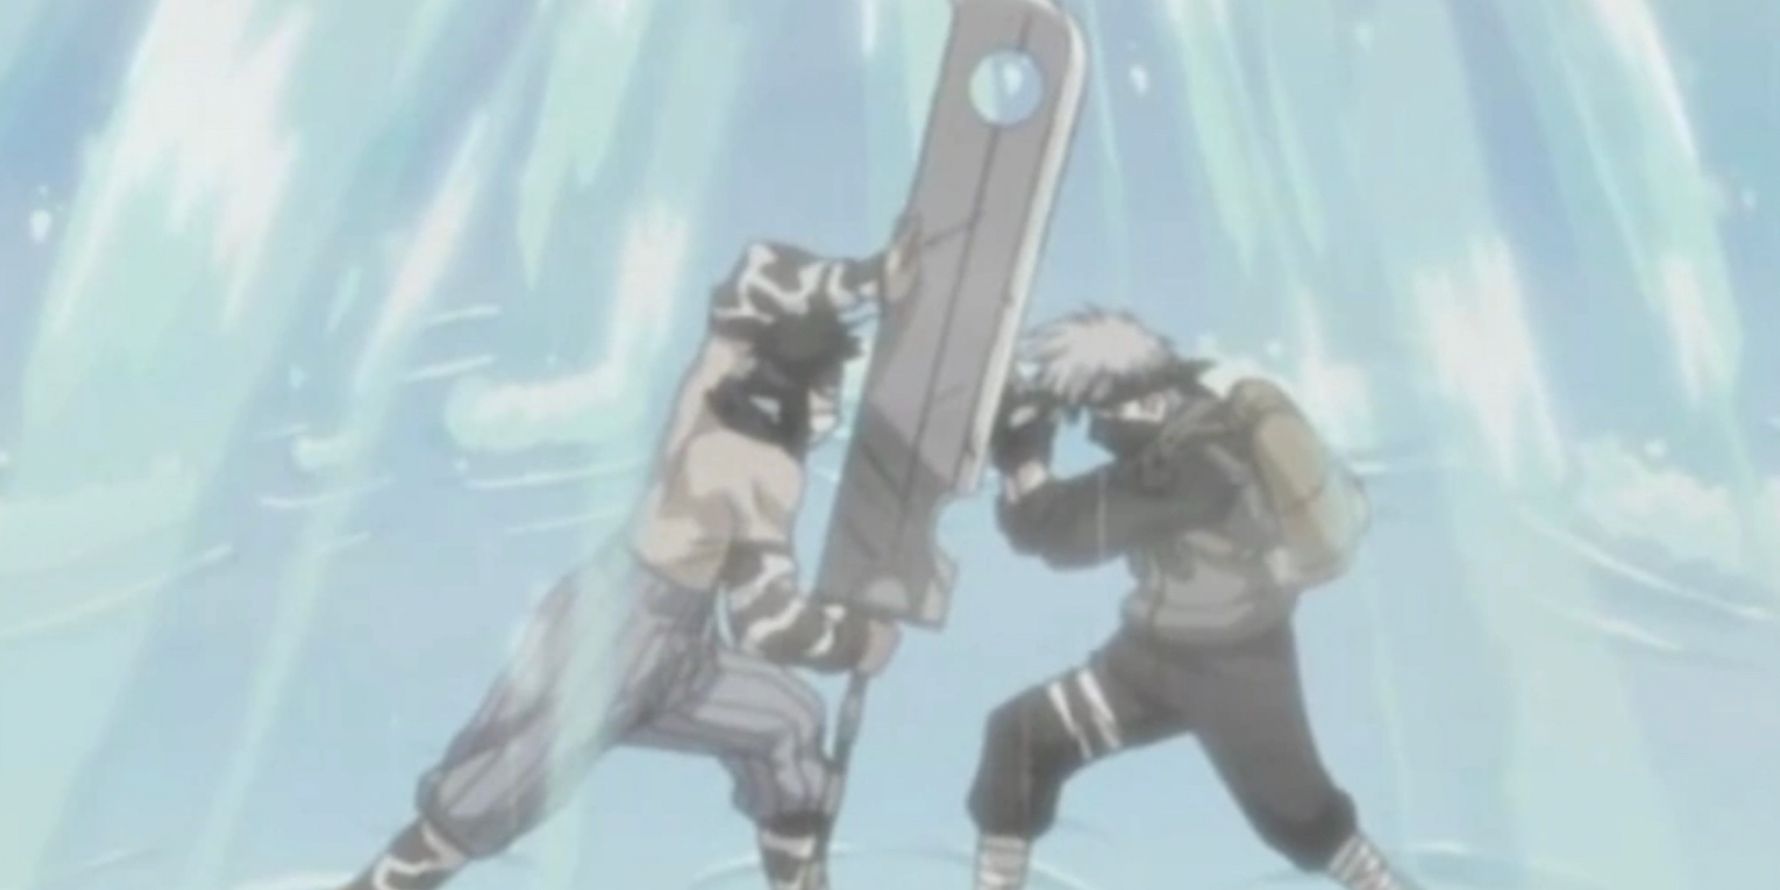 Zabuza fights Kakashi on the water in Naruto